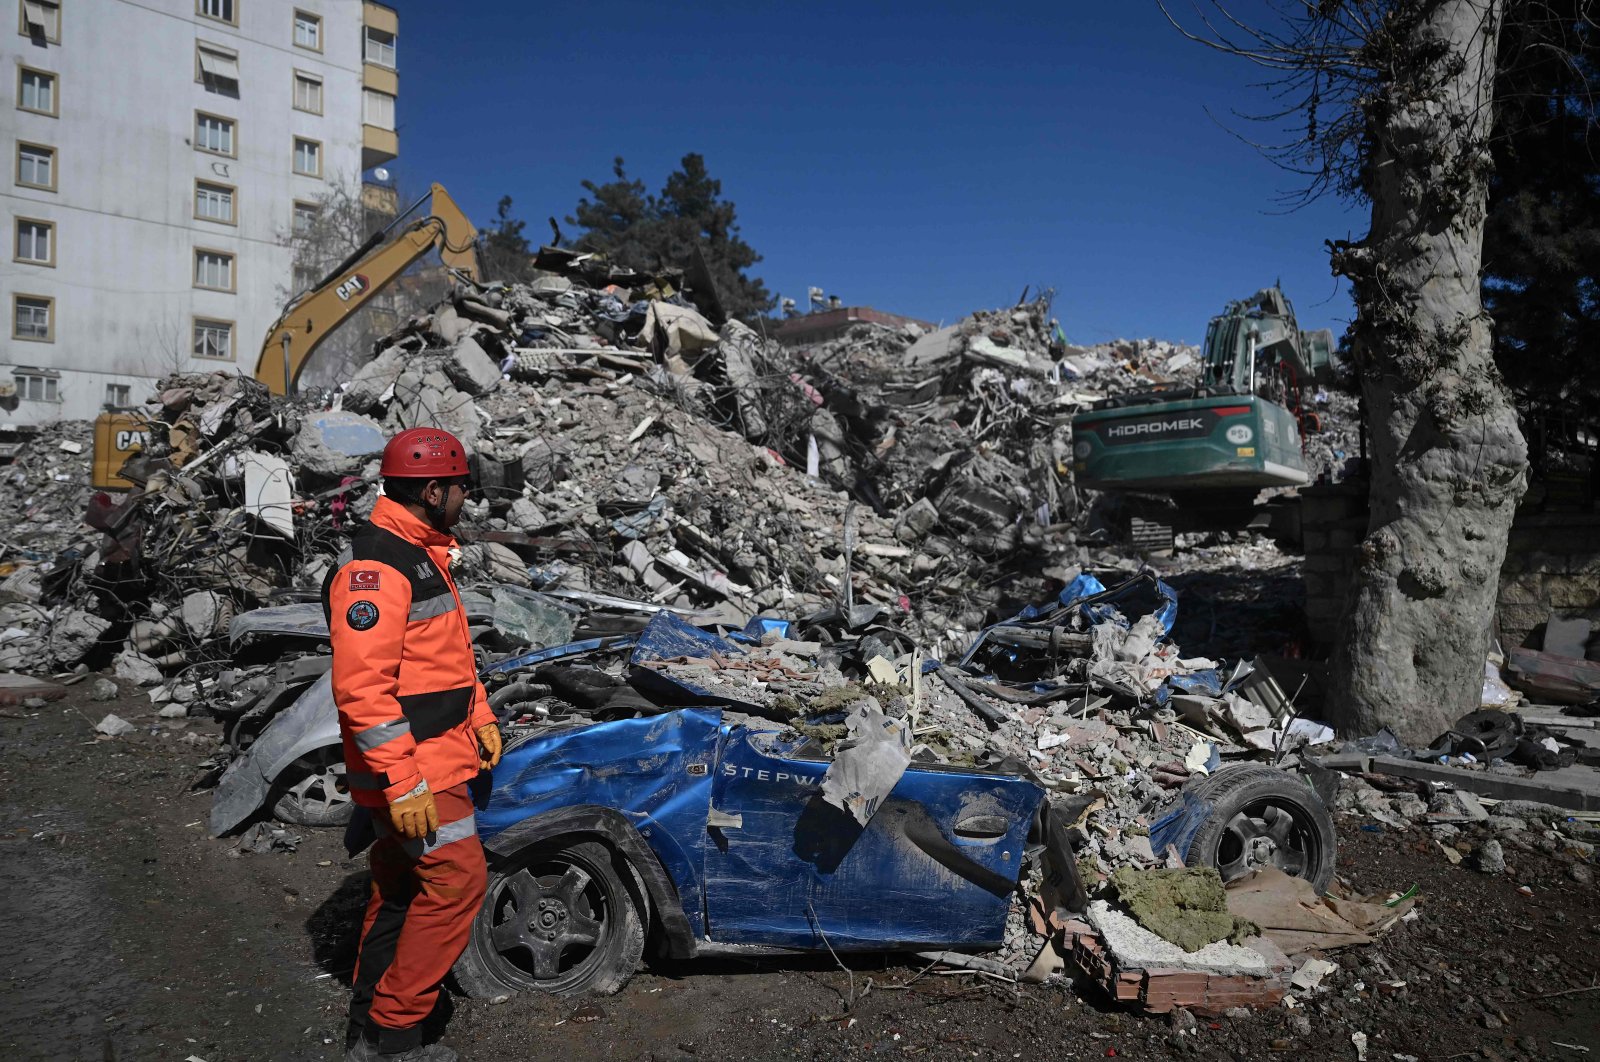 Keajaiban: Türkiye menyelamatkan 5 orang dari puing-puing 11 hari setelah gempa